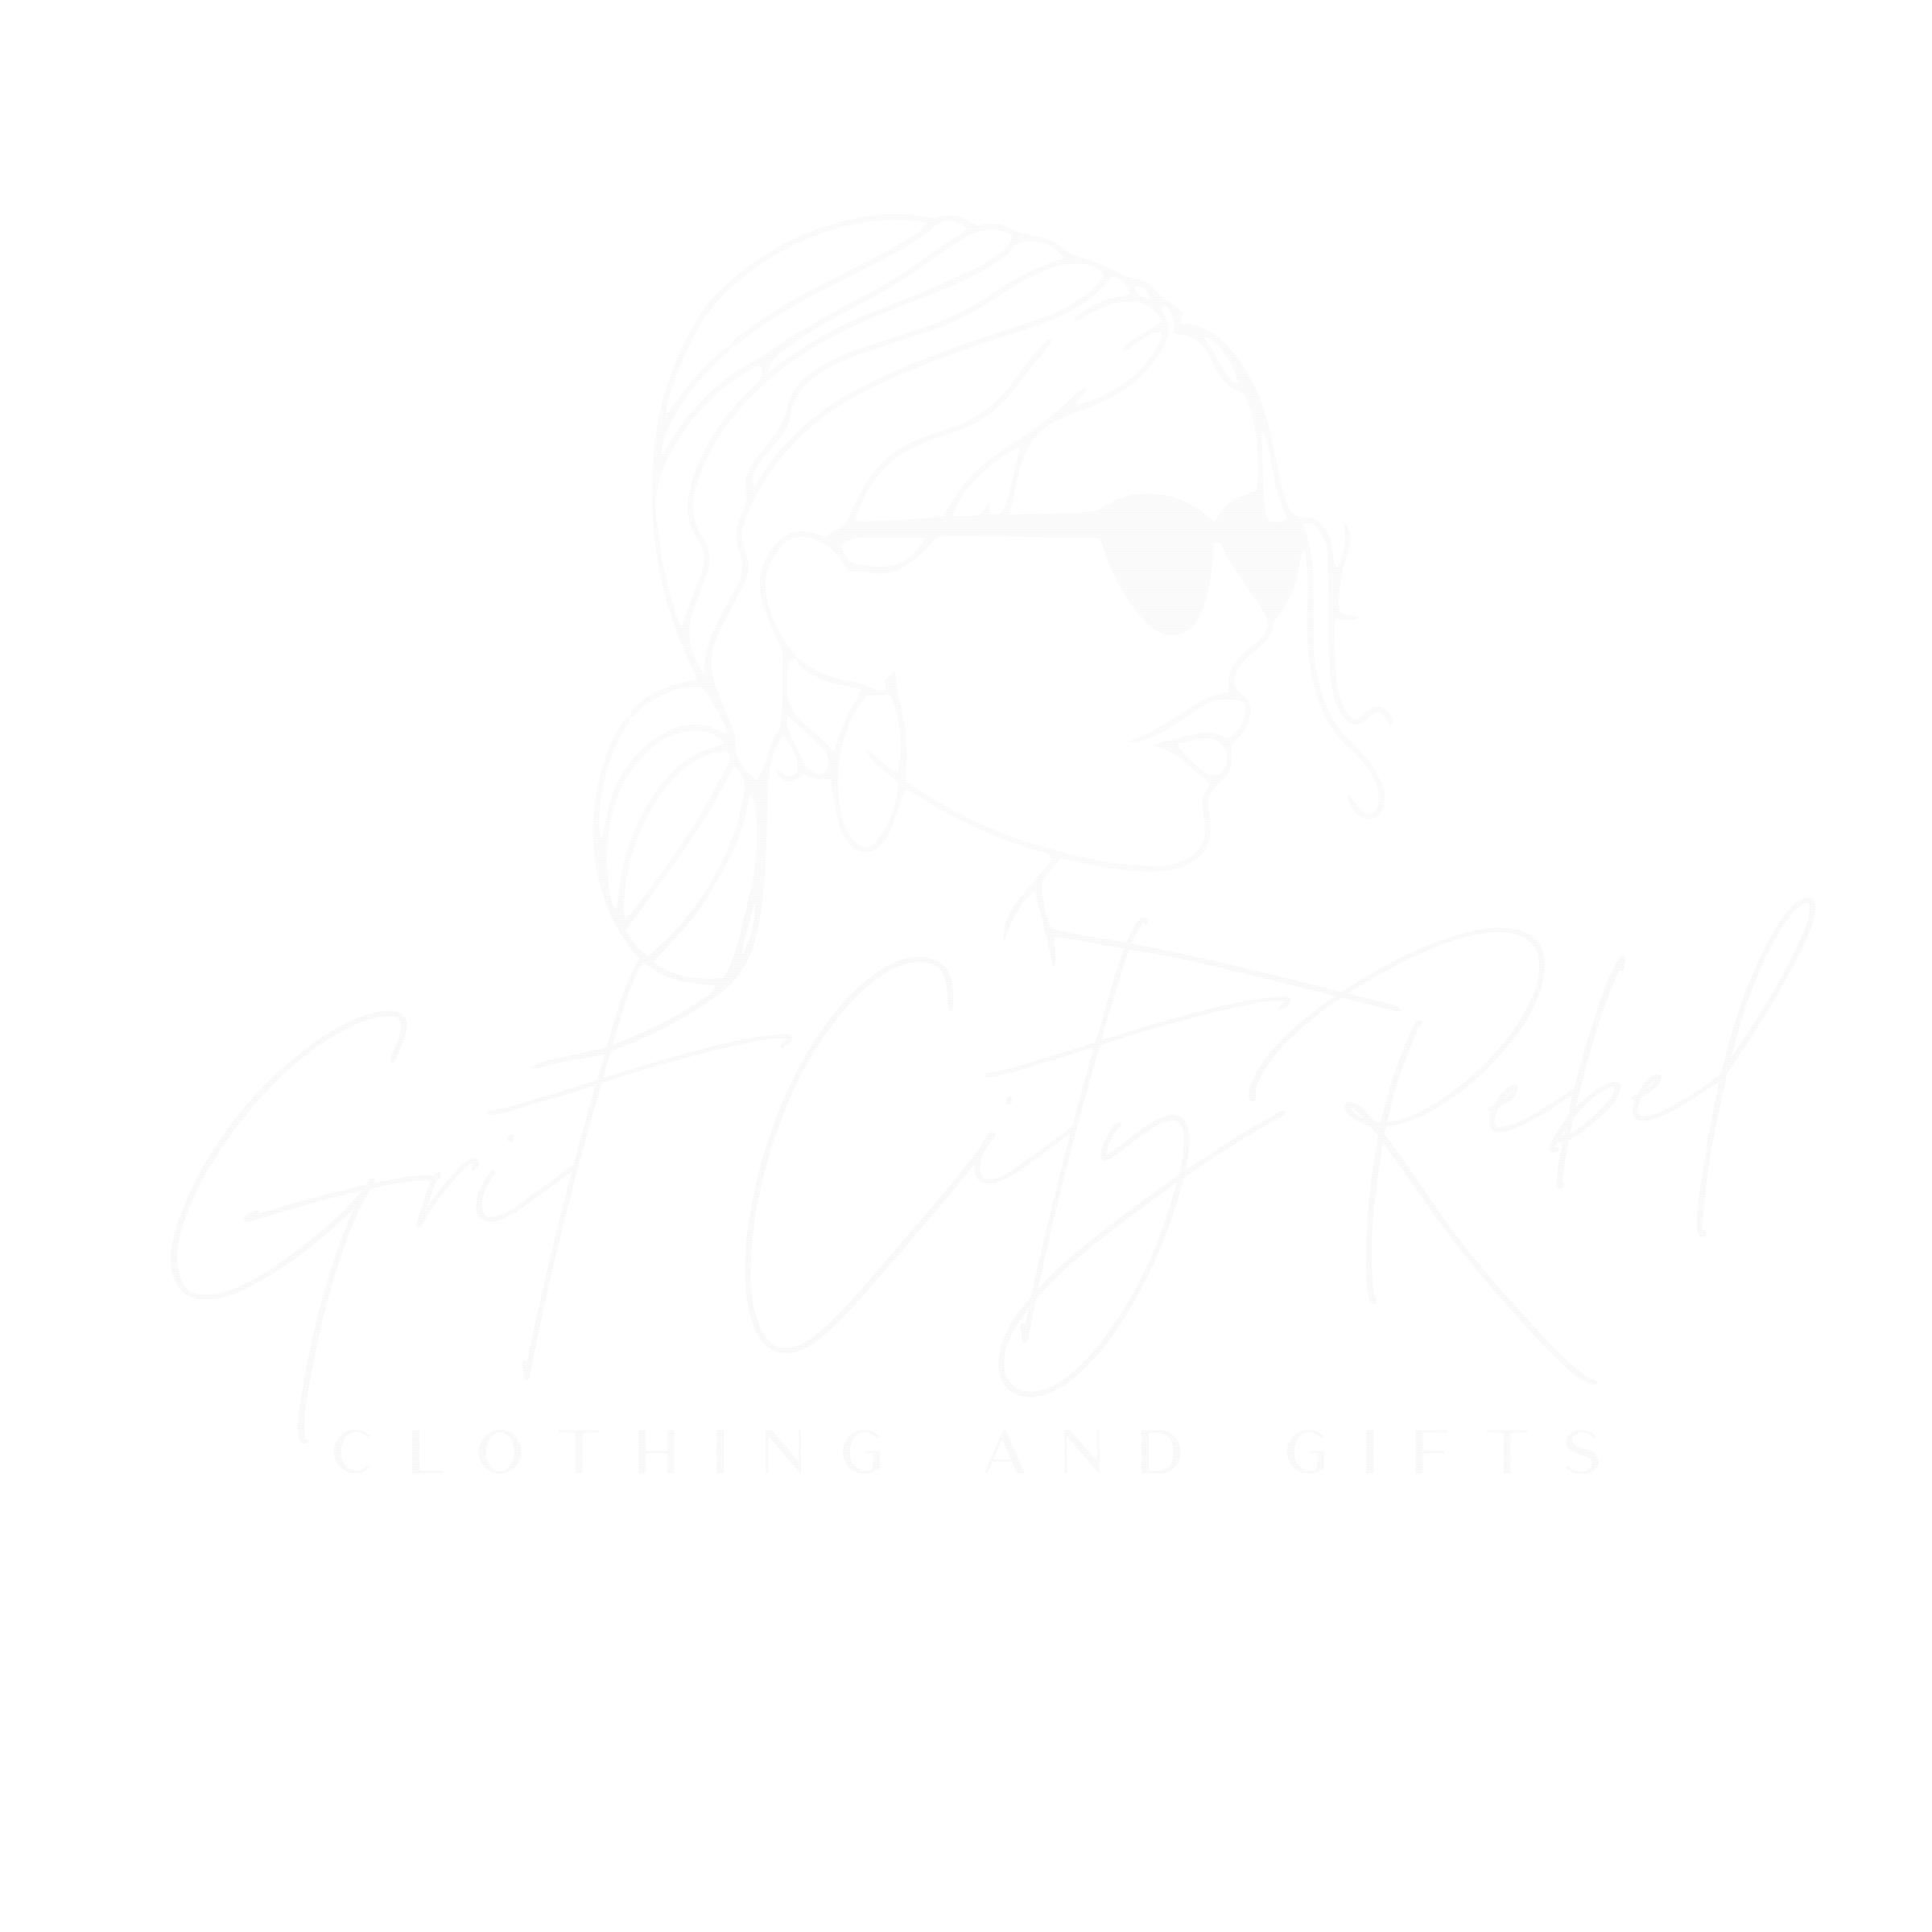 Grit City Rebel Meets Grit City Girl Clothing